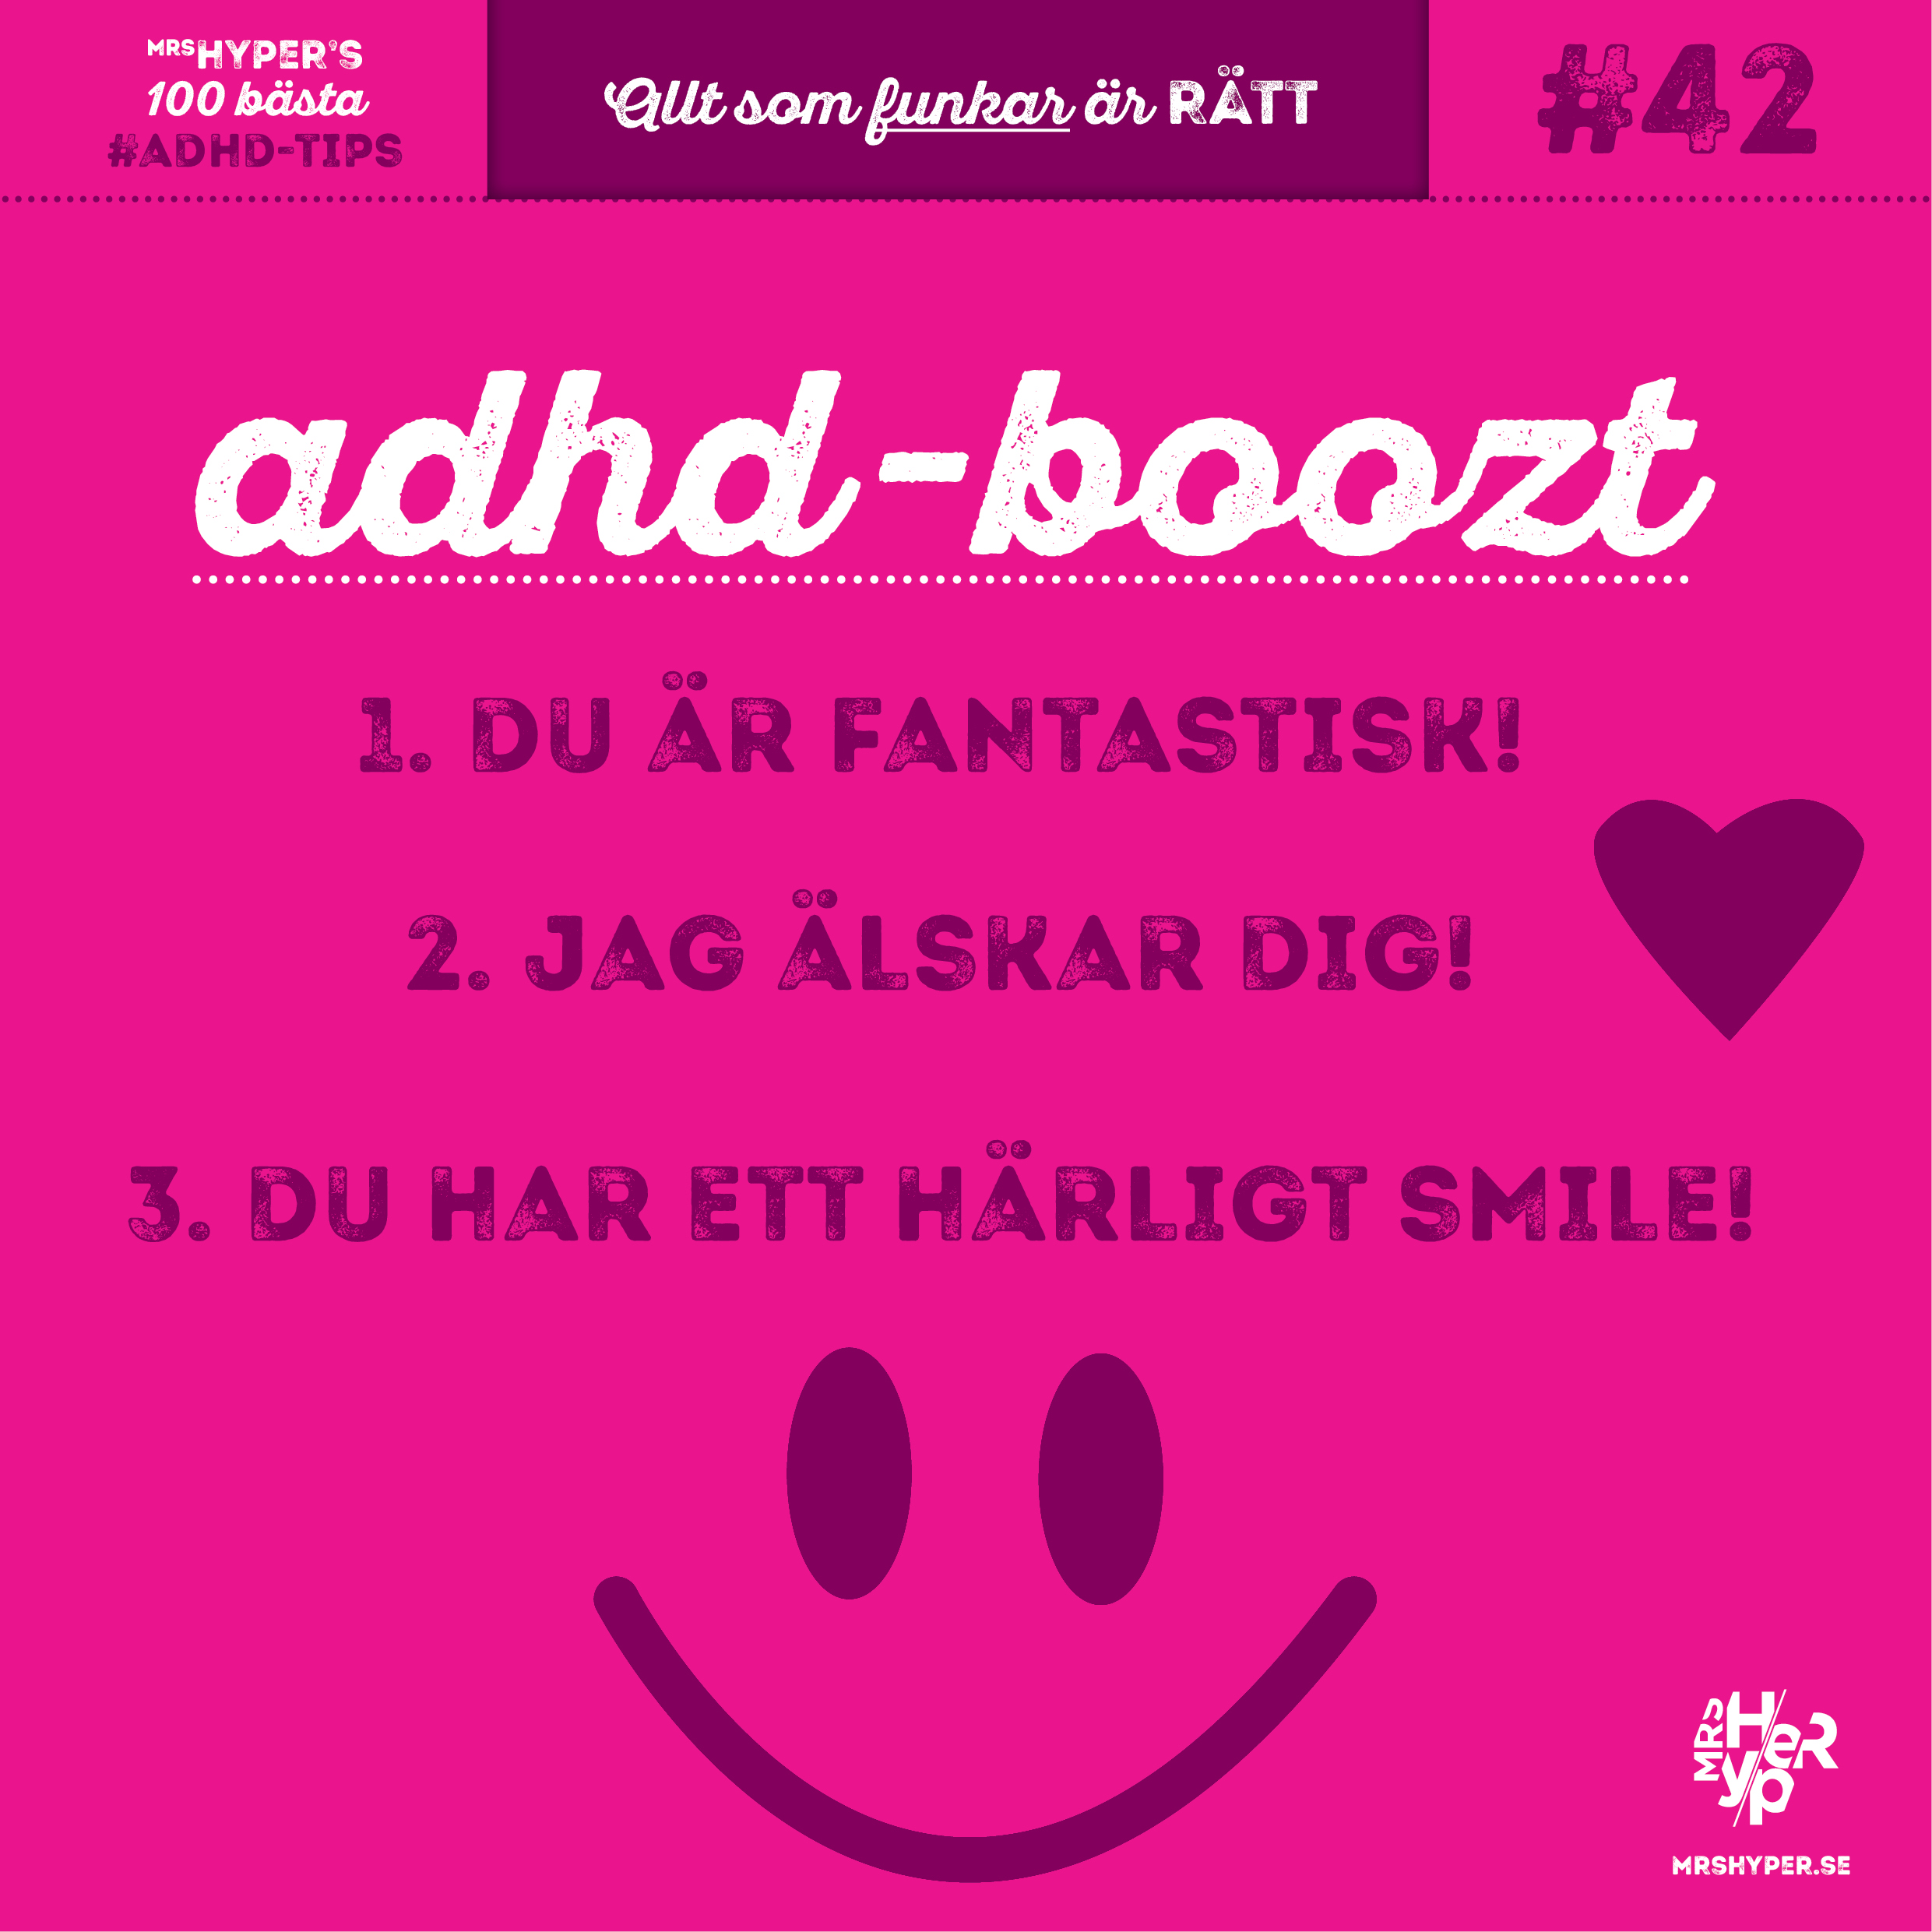 ADHD-tips #42. adhd-boozt 3:1